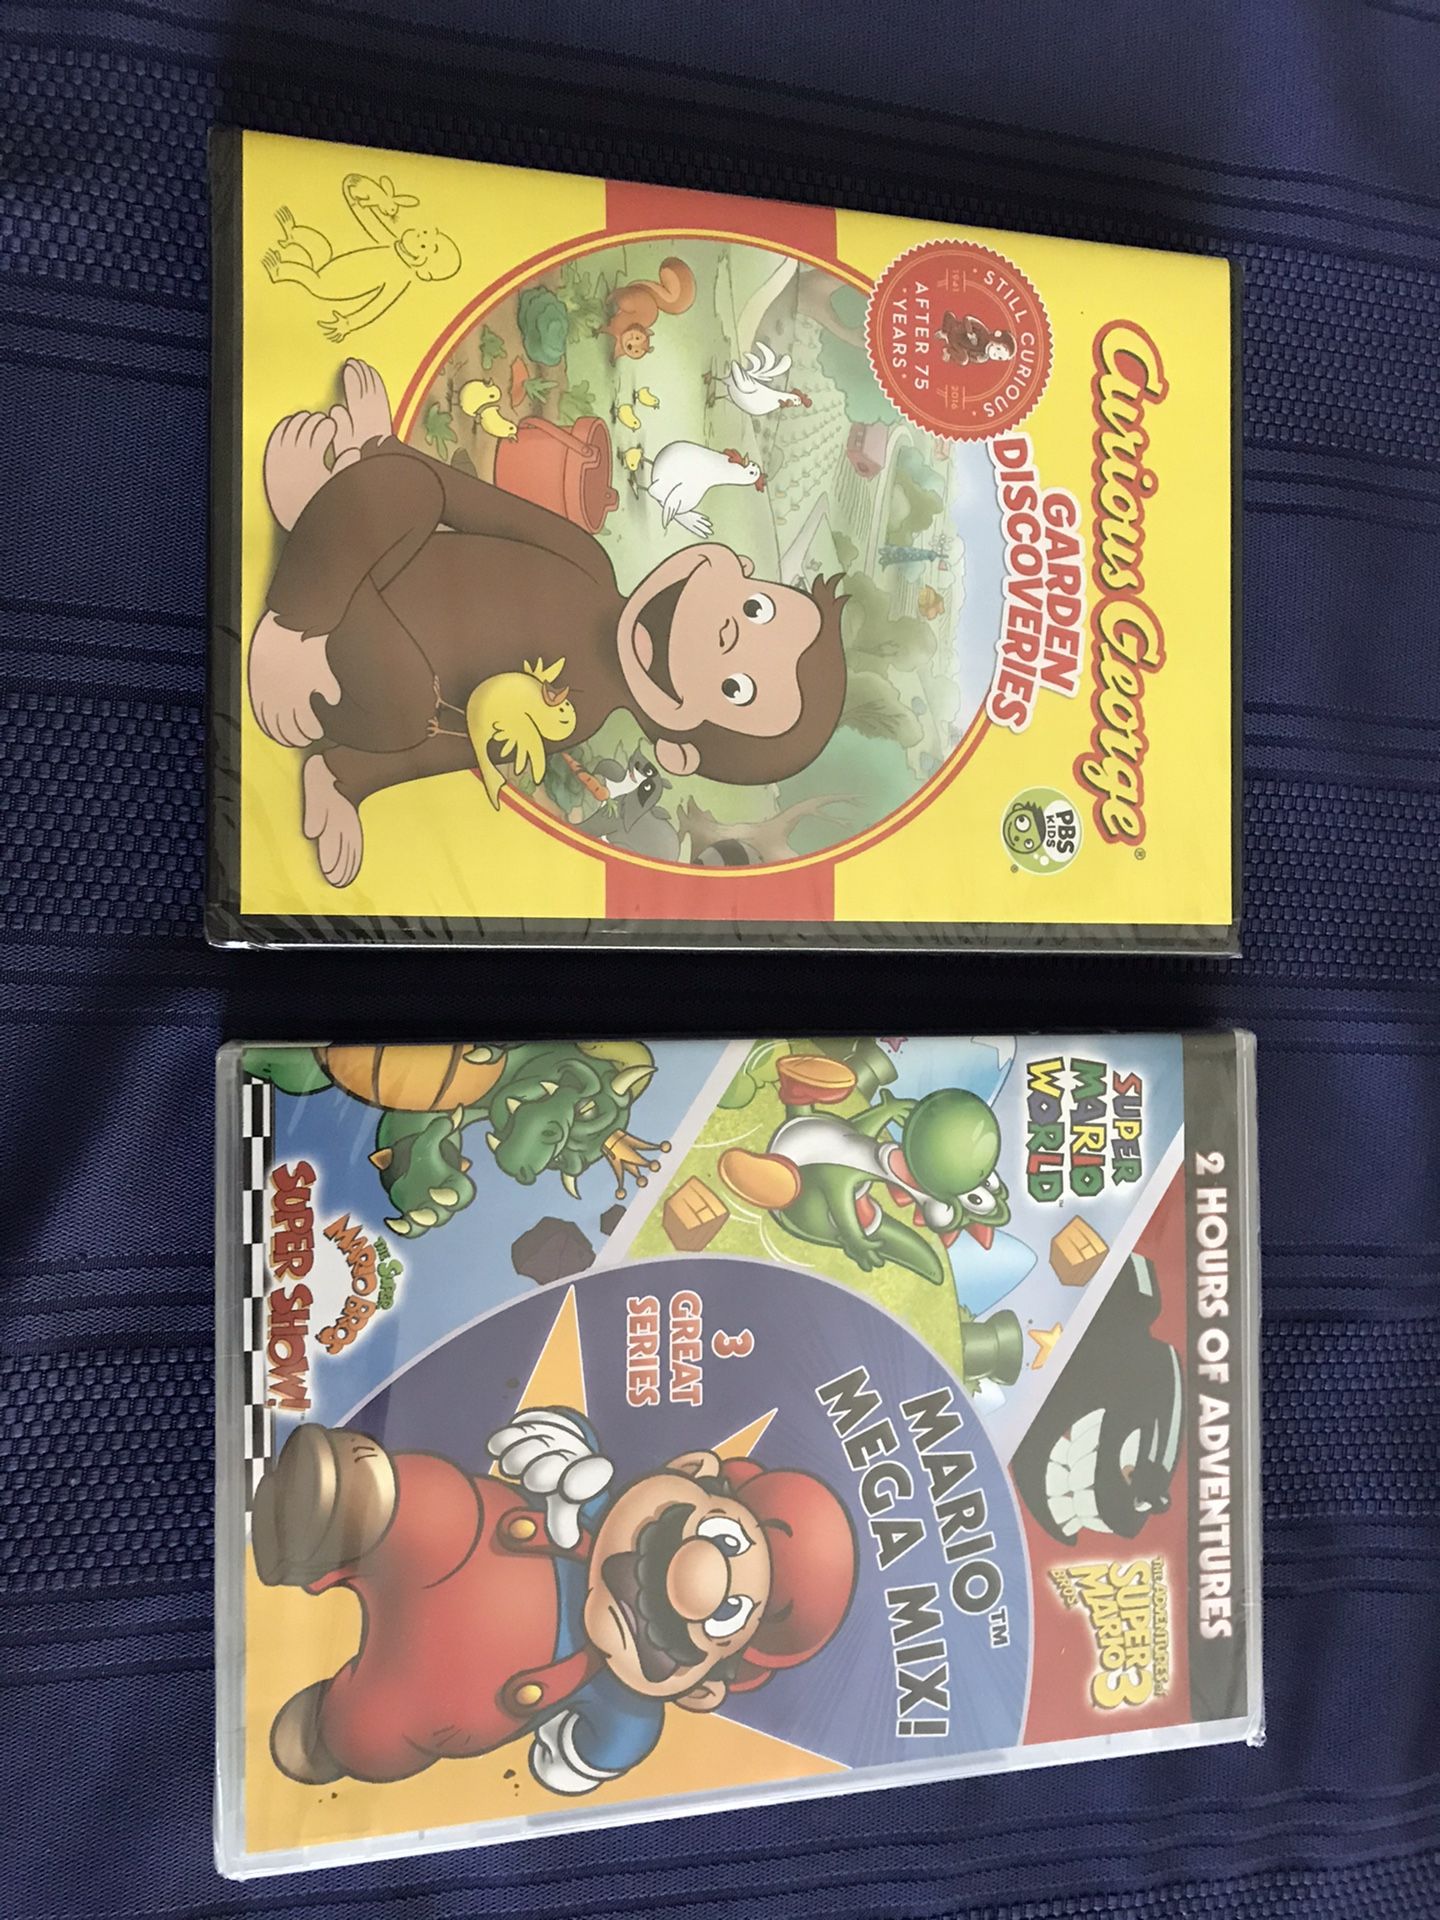 Curious George and Mario Mega Mix